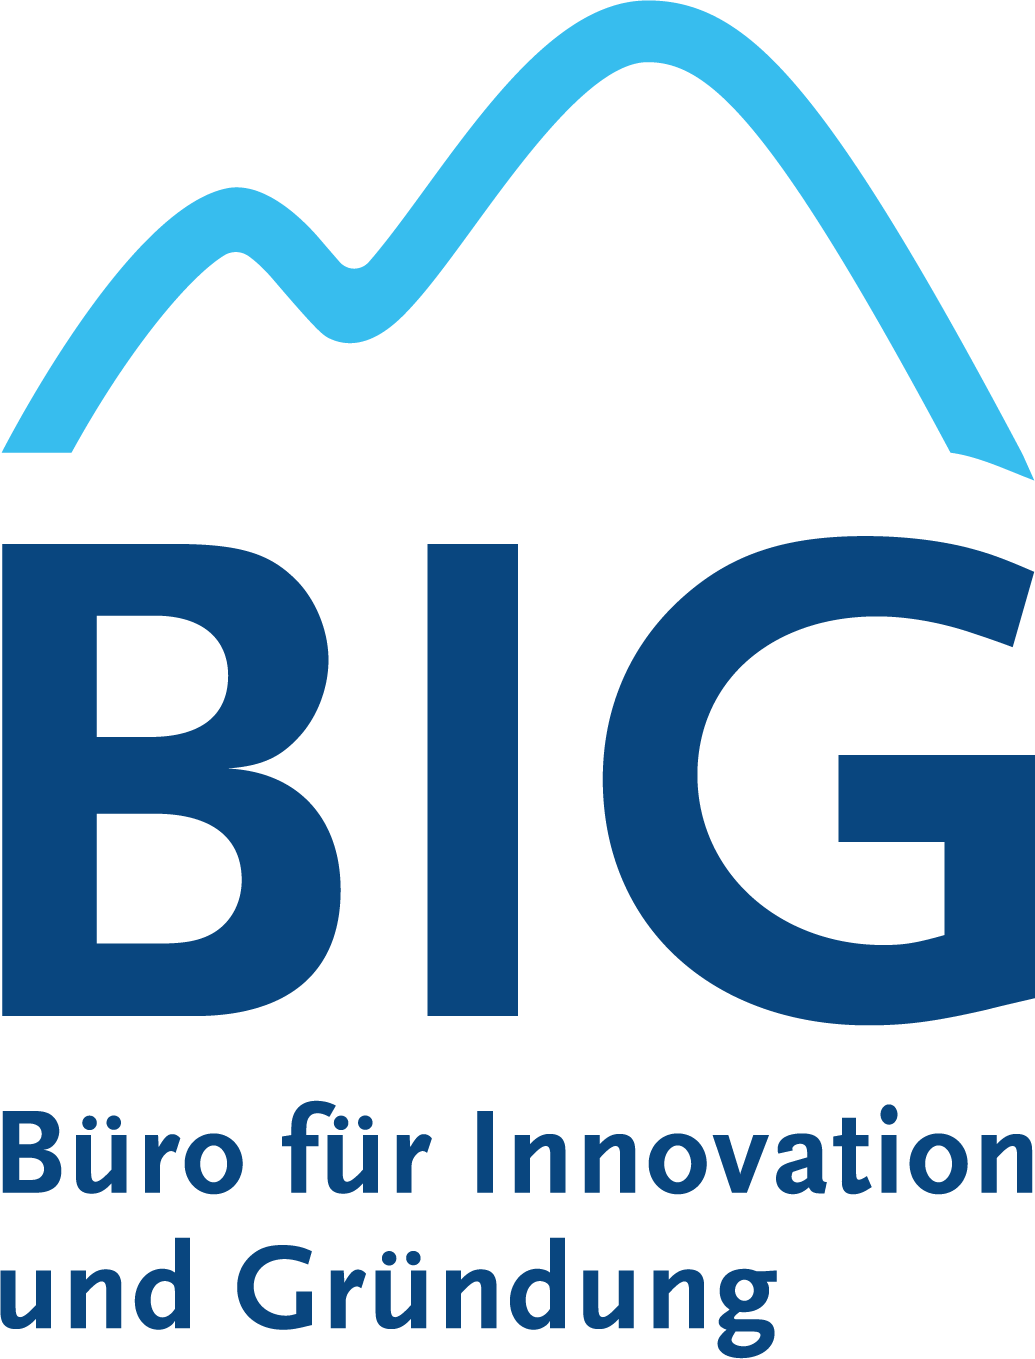 Office of Innovation and Entrepreneurship (BIG)